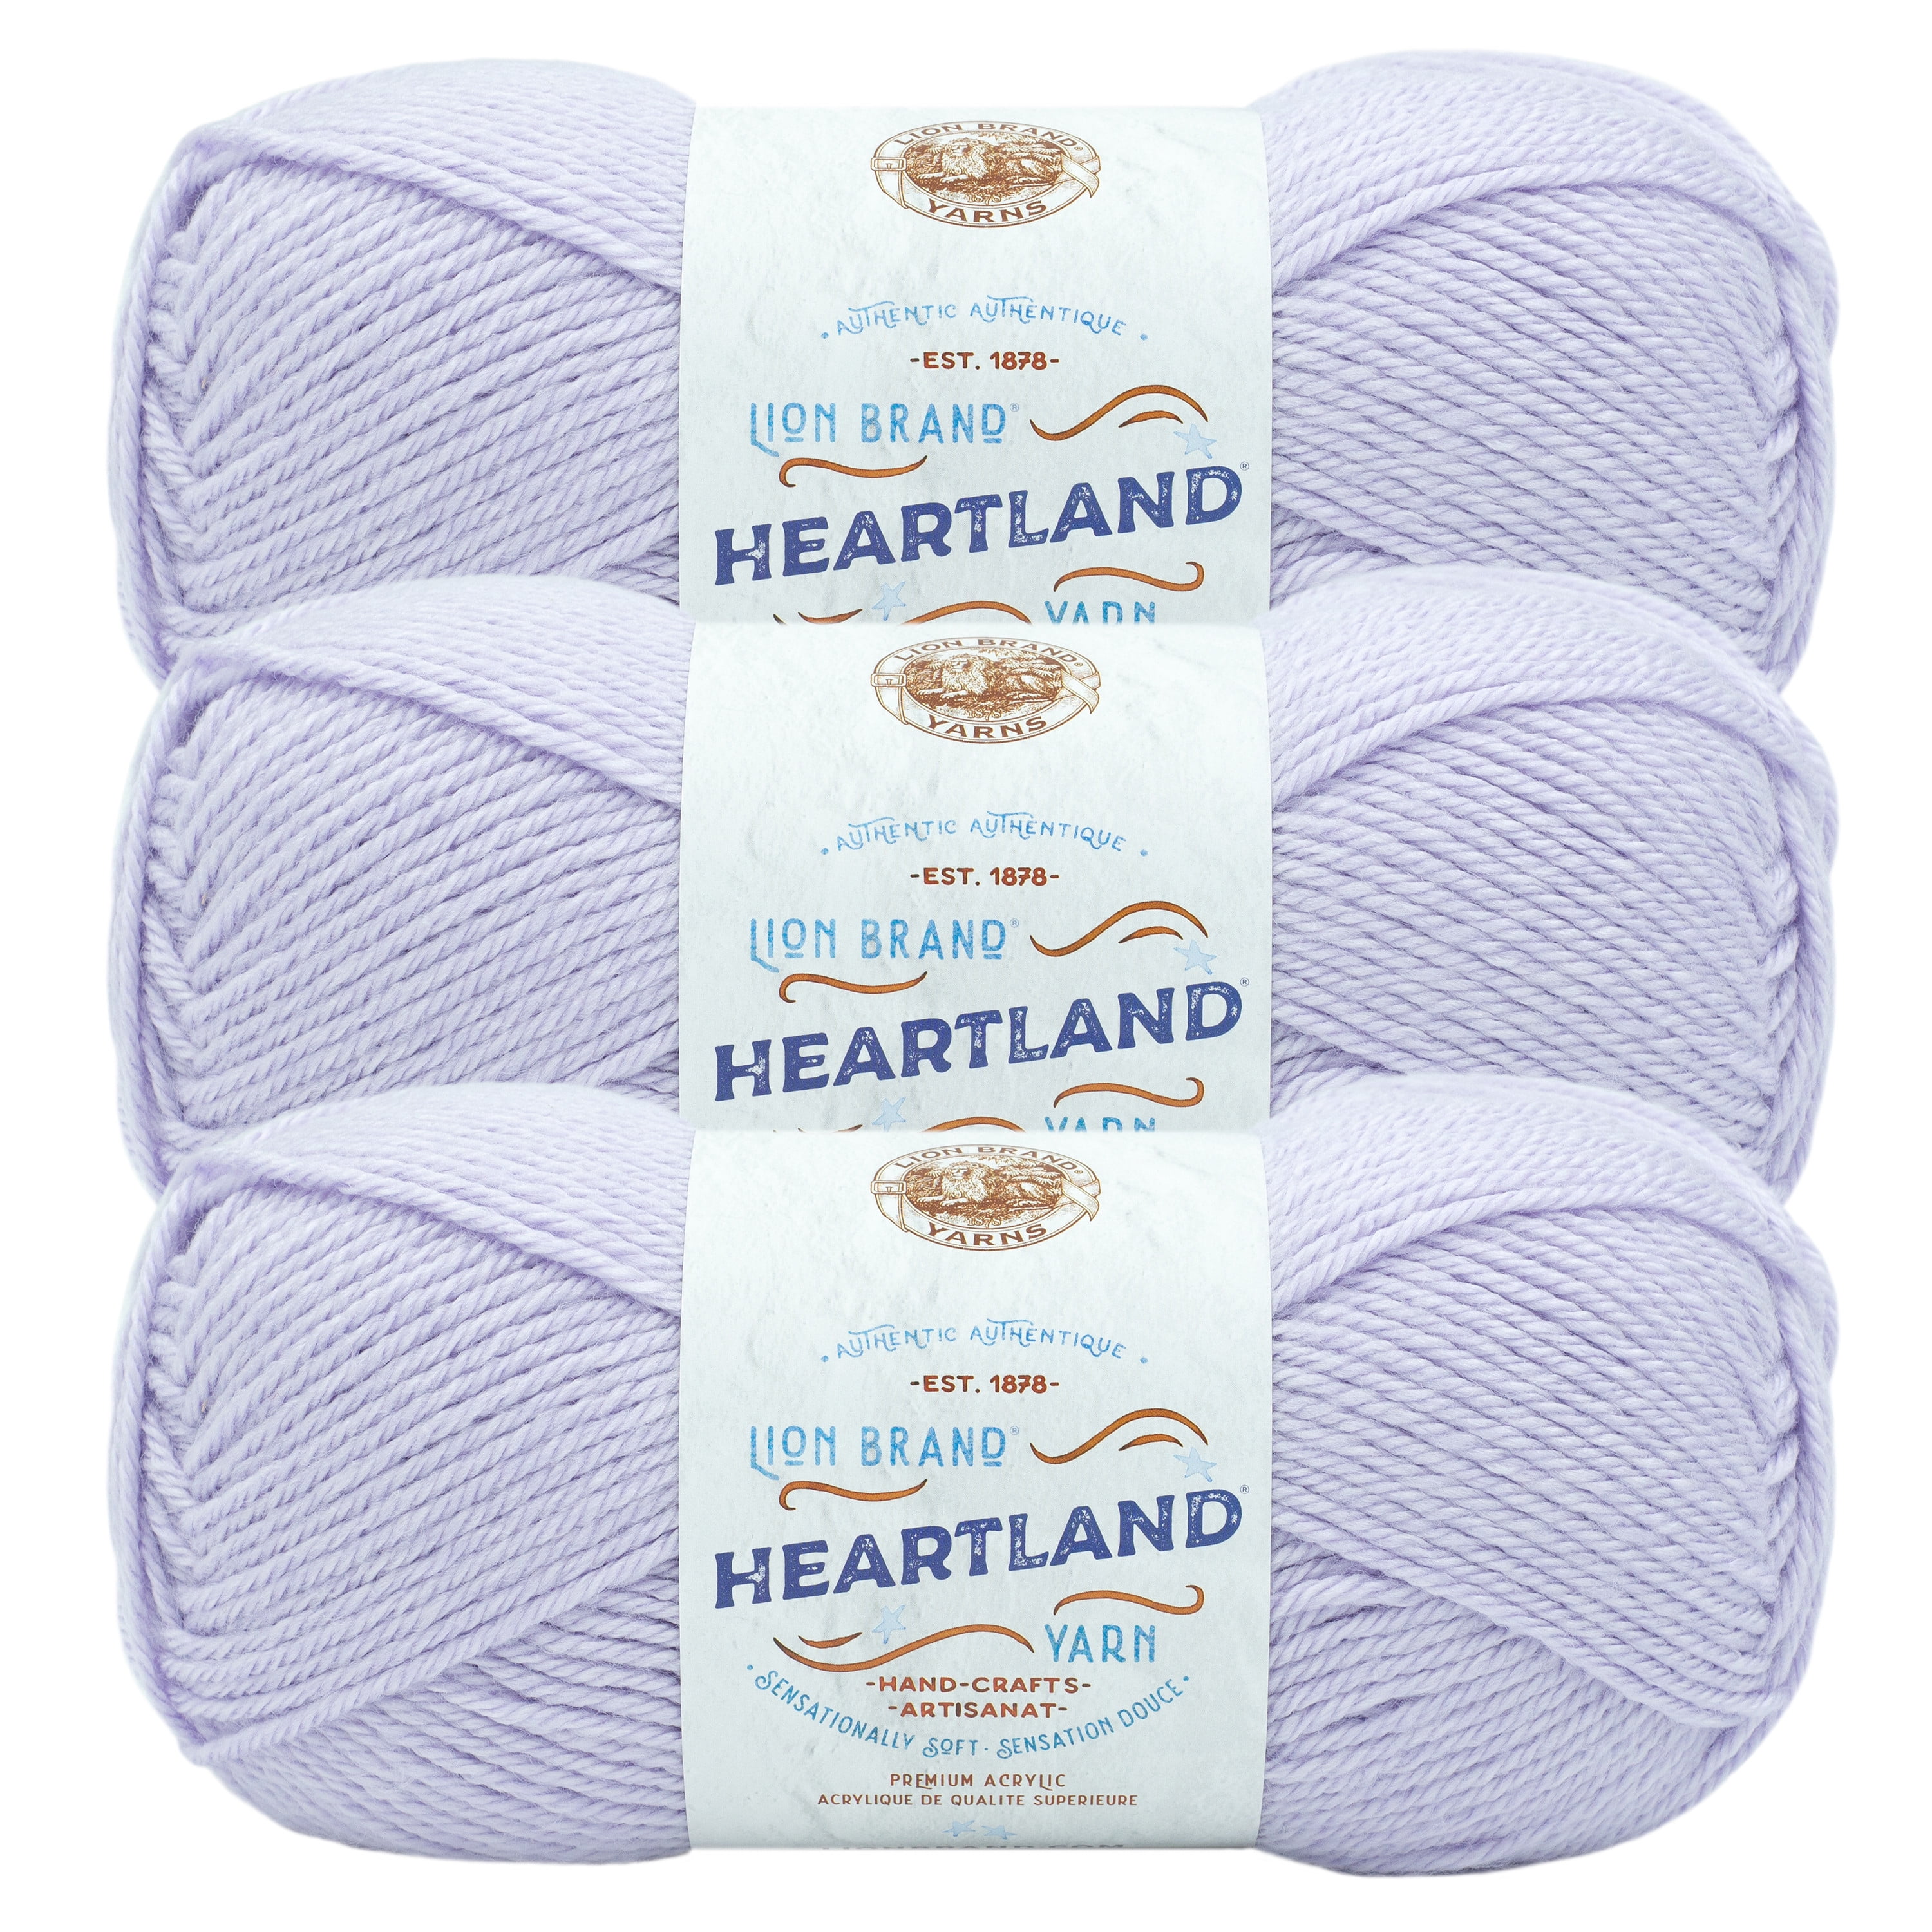 2) Lion Brand Heartland Yarn/Haleakala/251 yds 5 oz Each/ New.